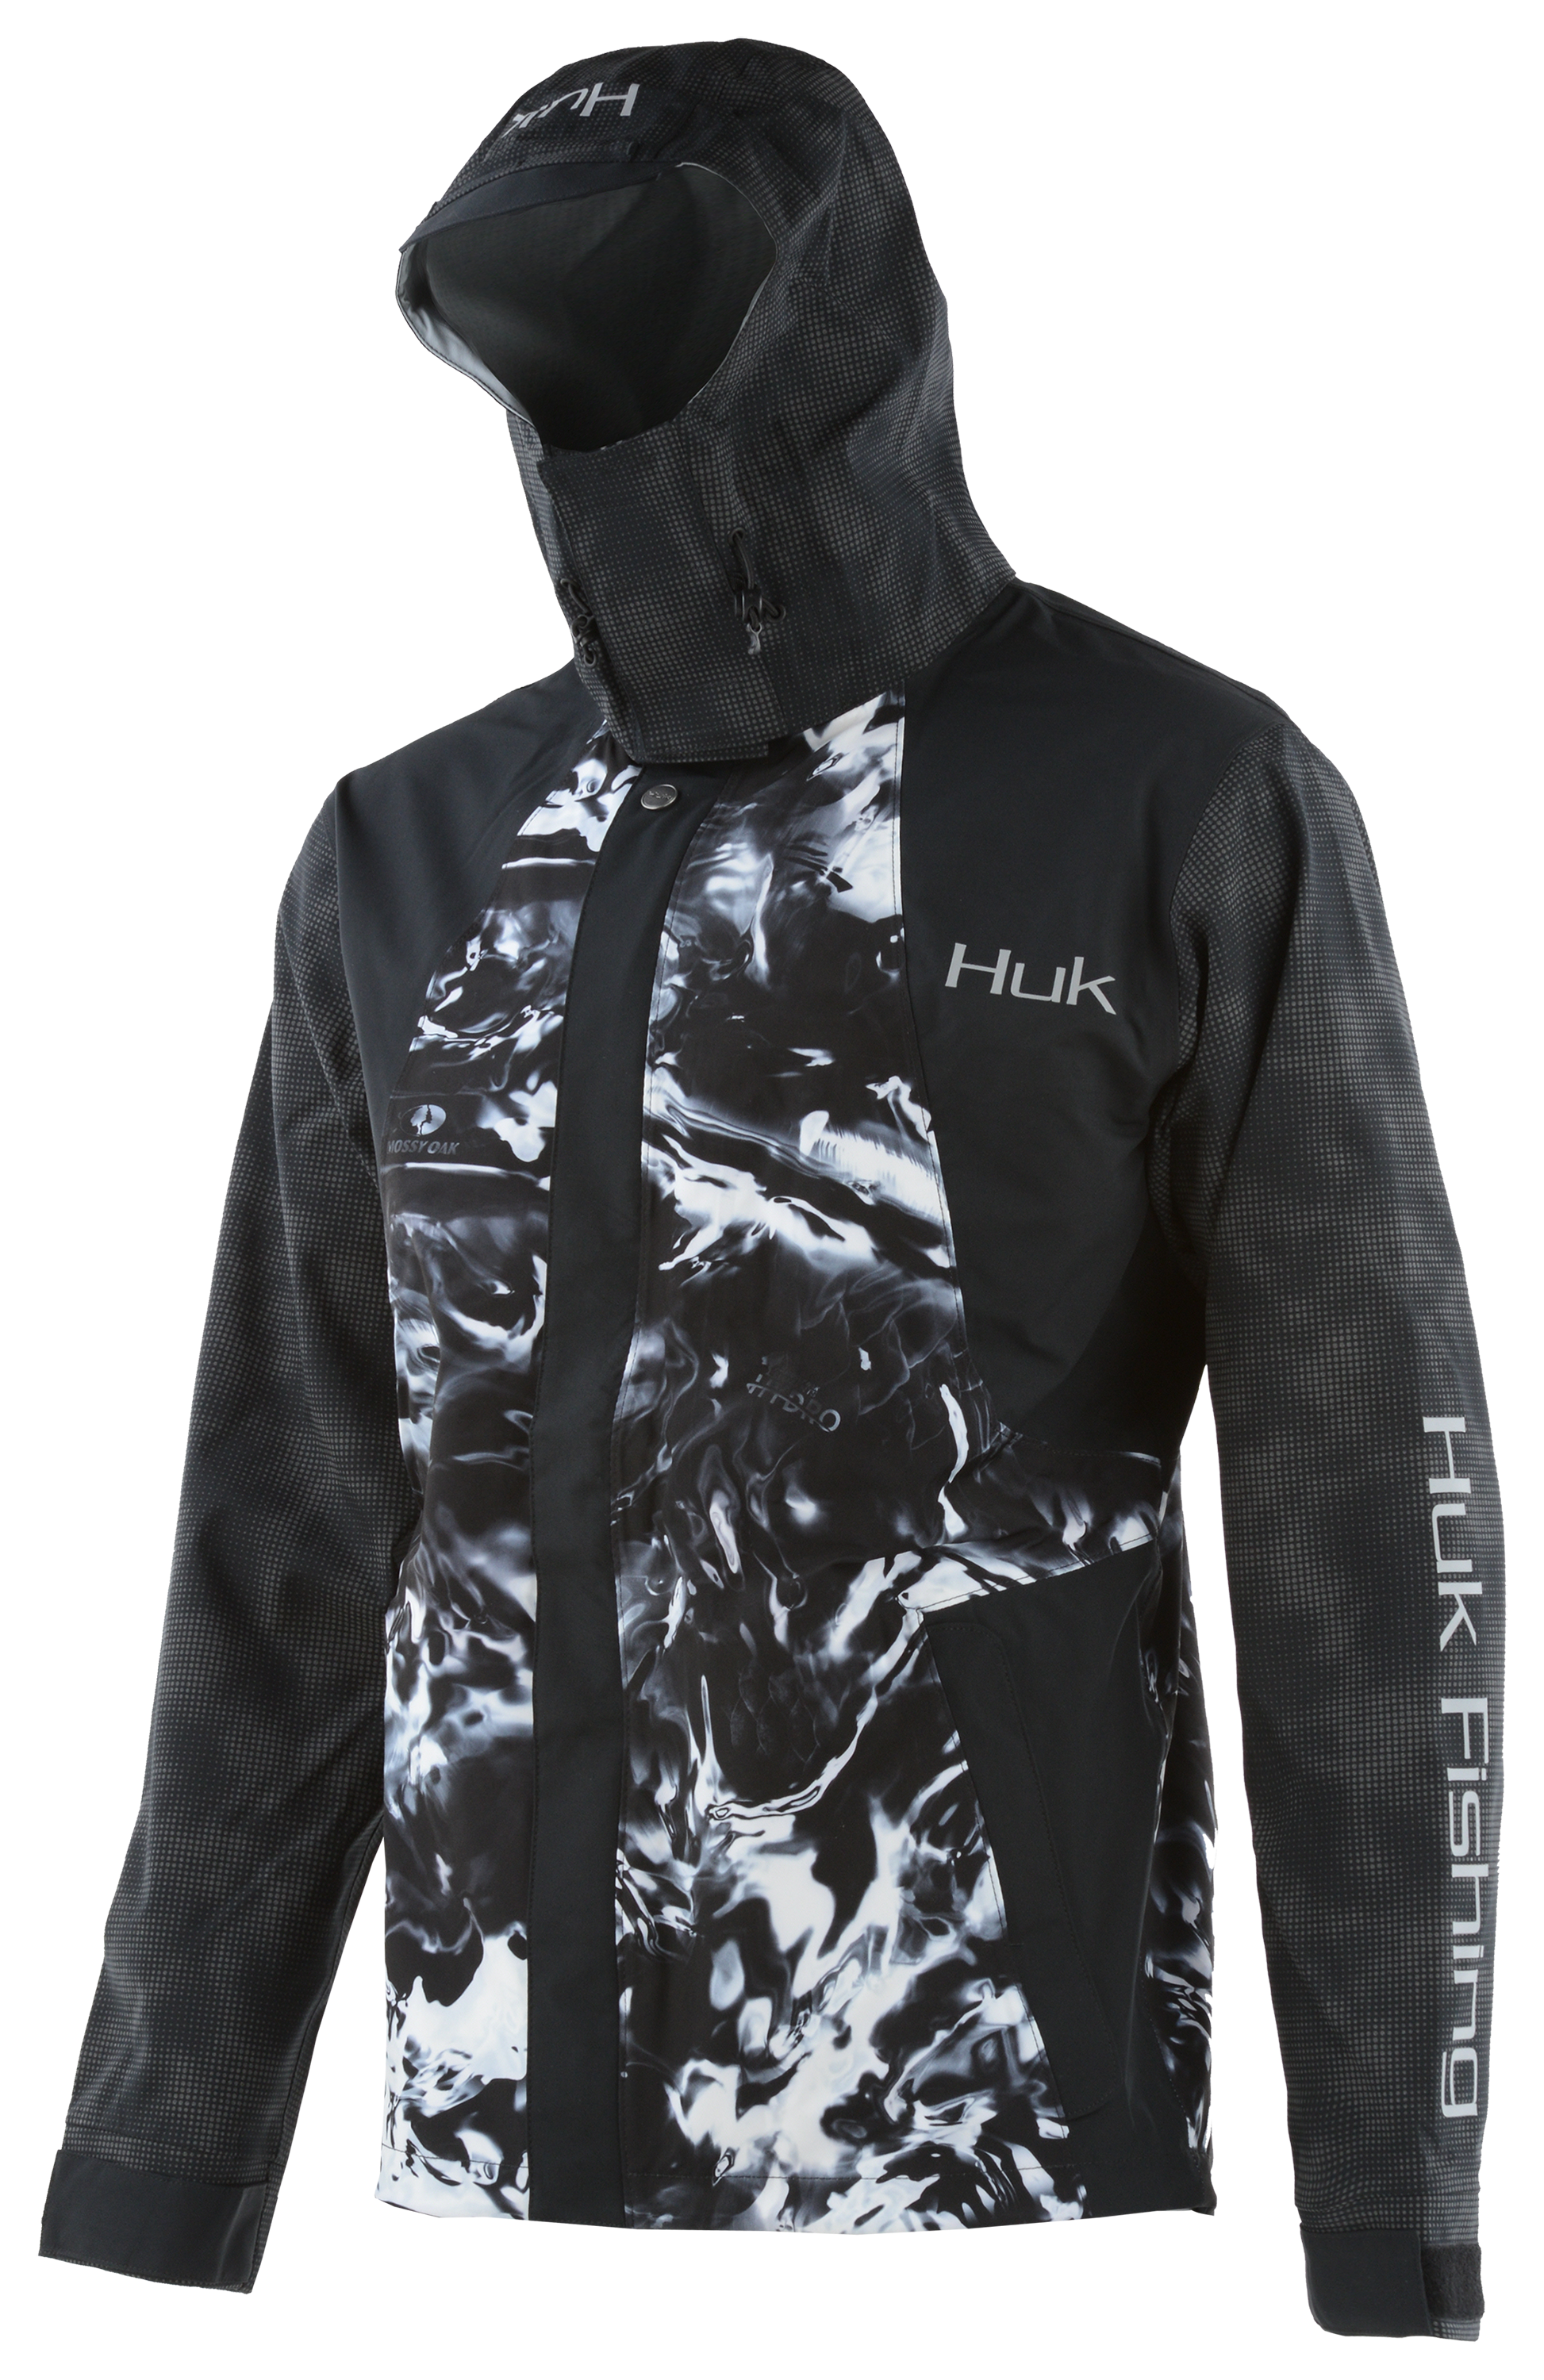 Huk Hydra Reflective Jacket for Men